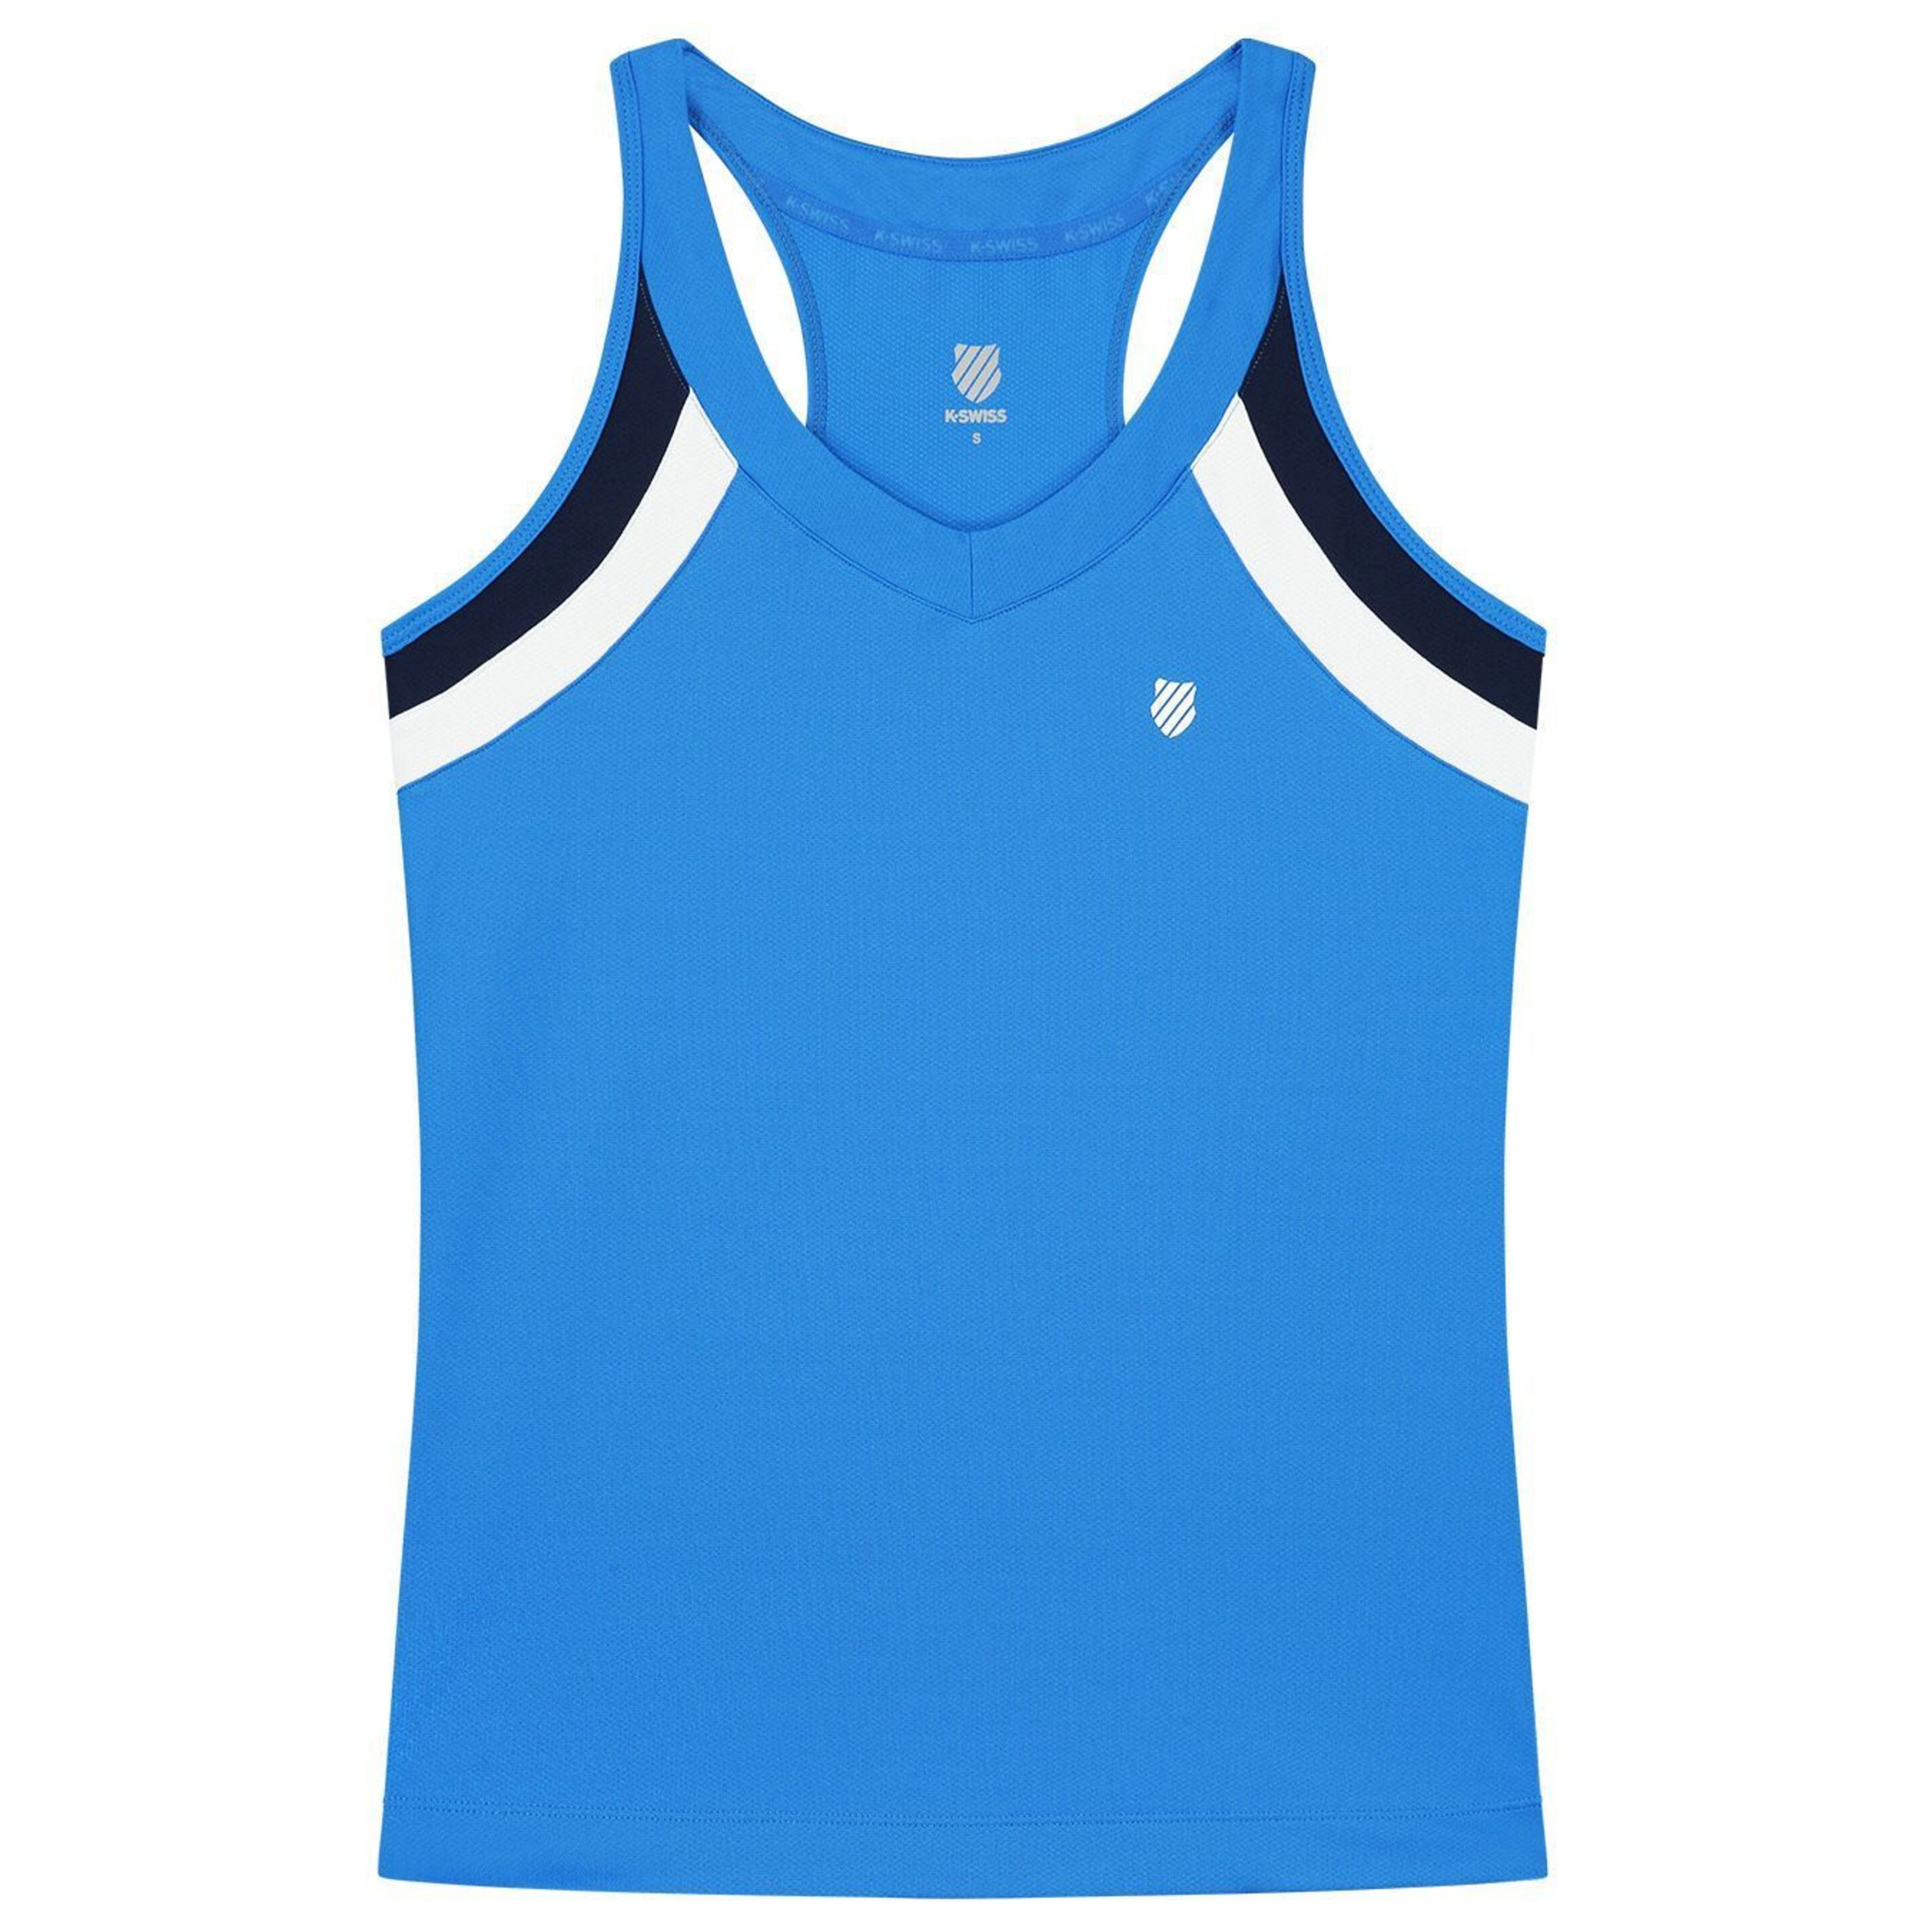 Camiseta De Tenis Y Pádel K-swiss Tirantes Core Team - azul - 